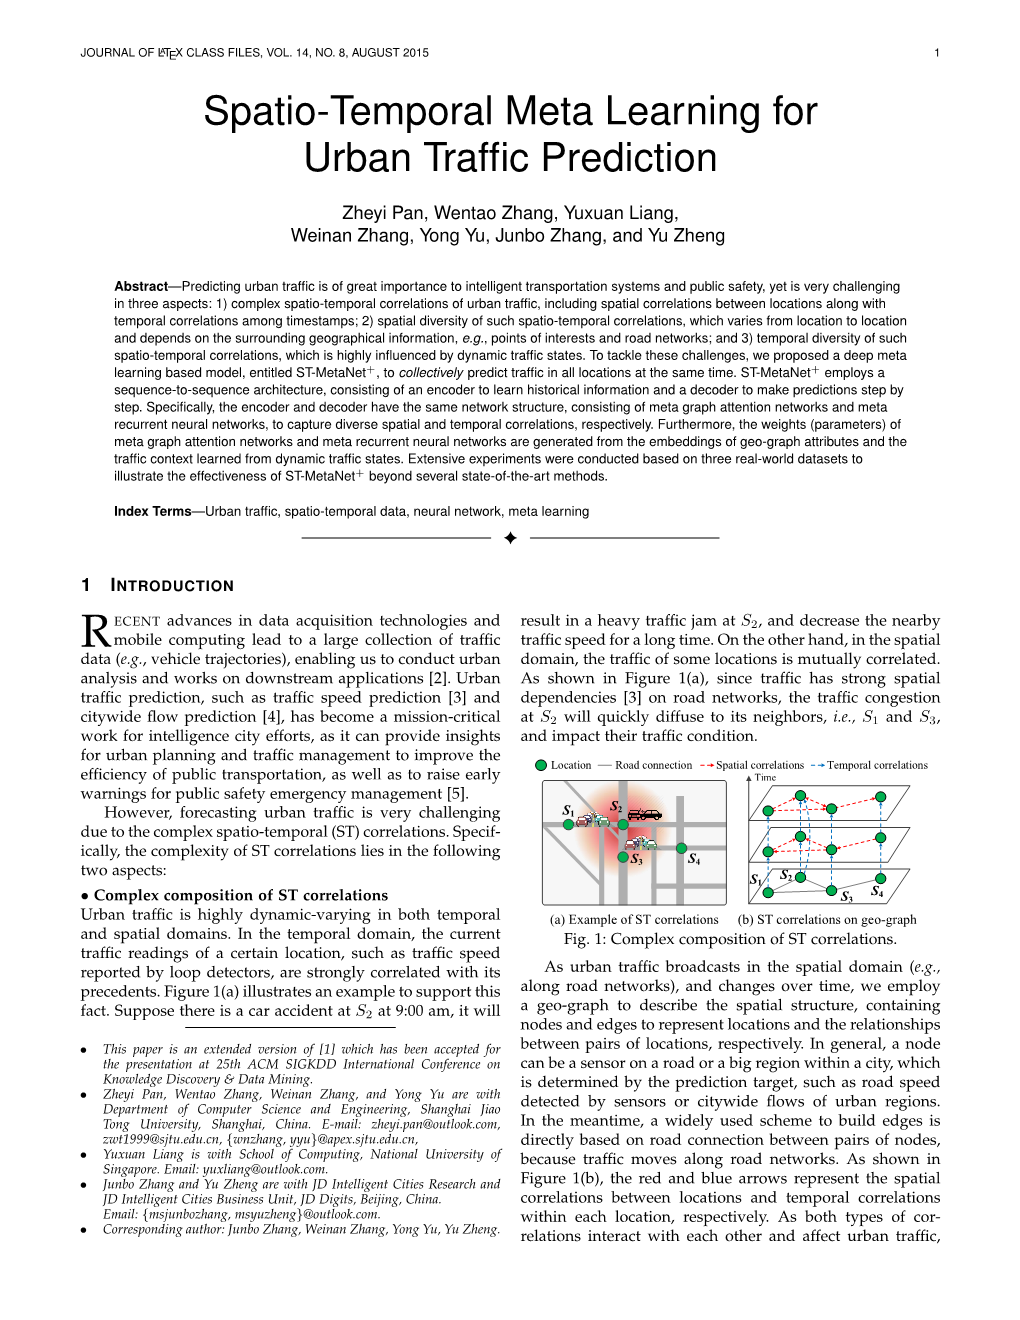 Spatio-Temporal Meta Learning for Urban Traffic Prediction